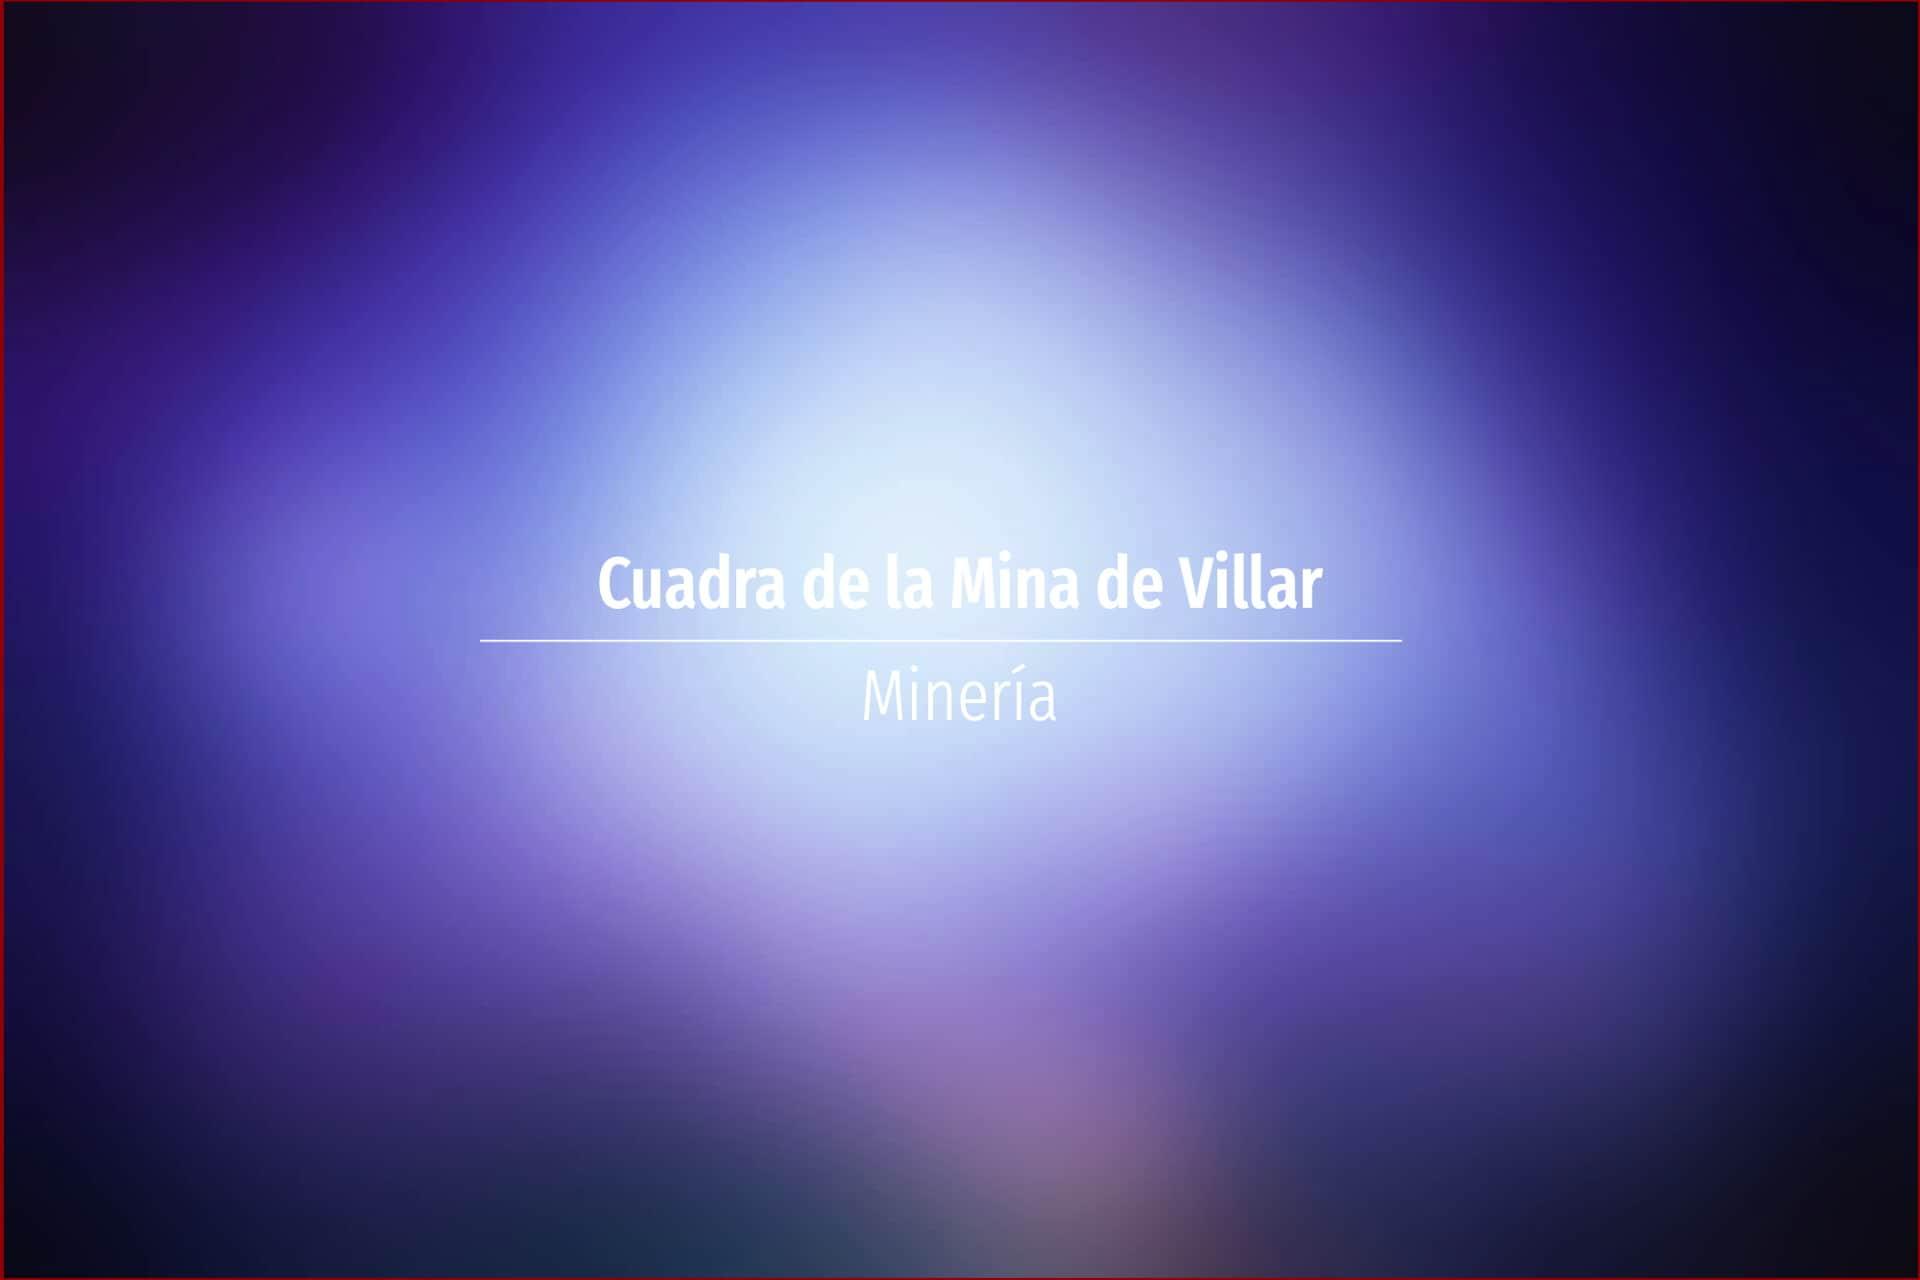 Cuadra de la Mina de Villar